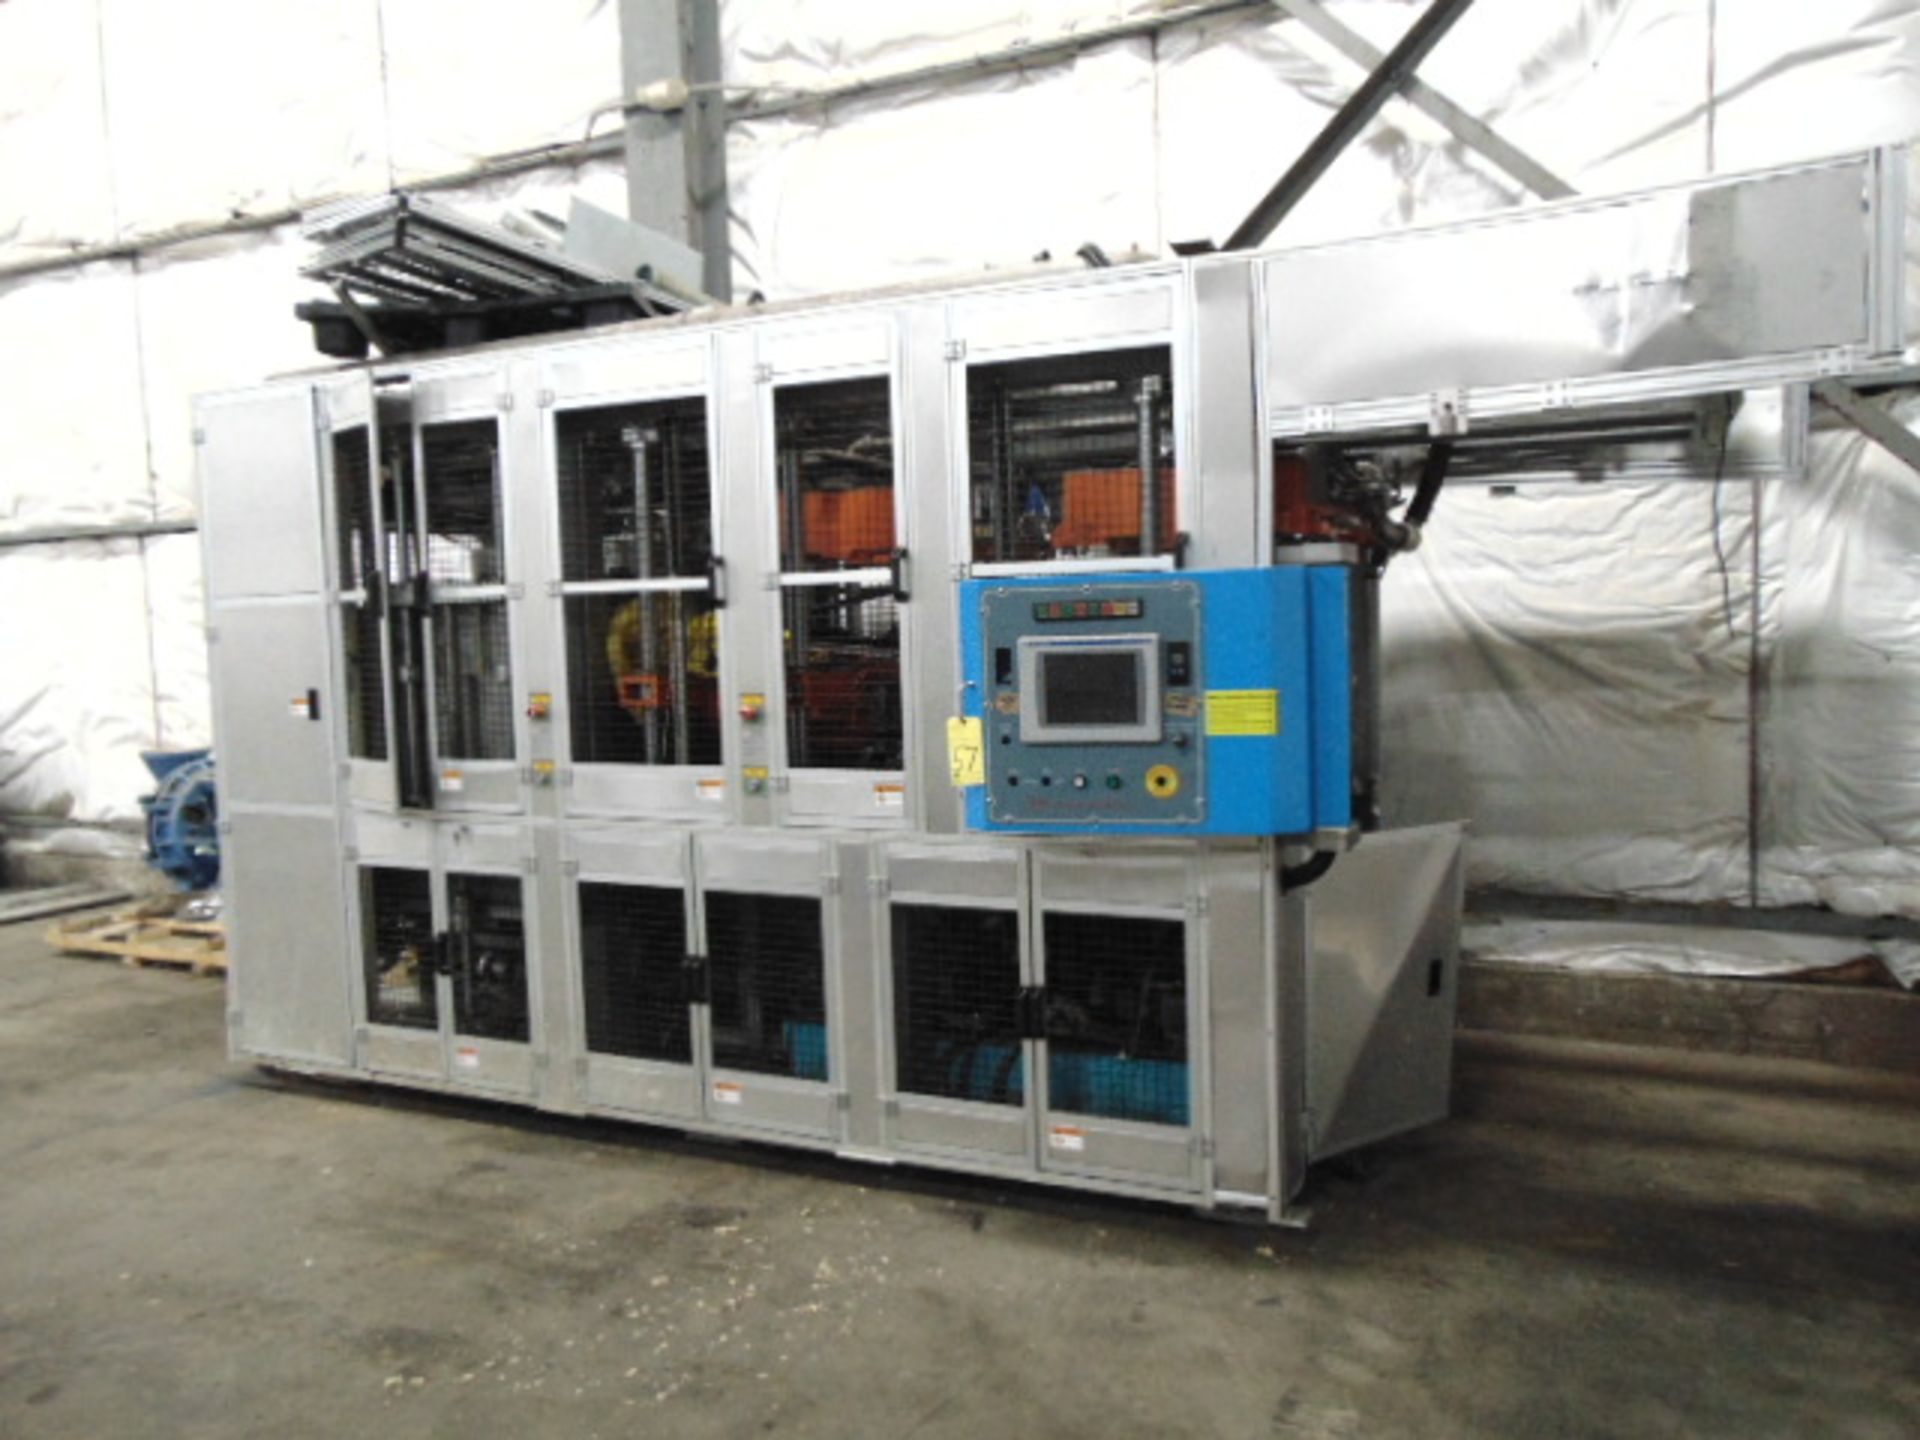 THERMOFORMING MACHINE, TAIWAN PULP MOLDING MDL. TPM-850, mfg. 5/2015, 850mm x 750mm x 100mm